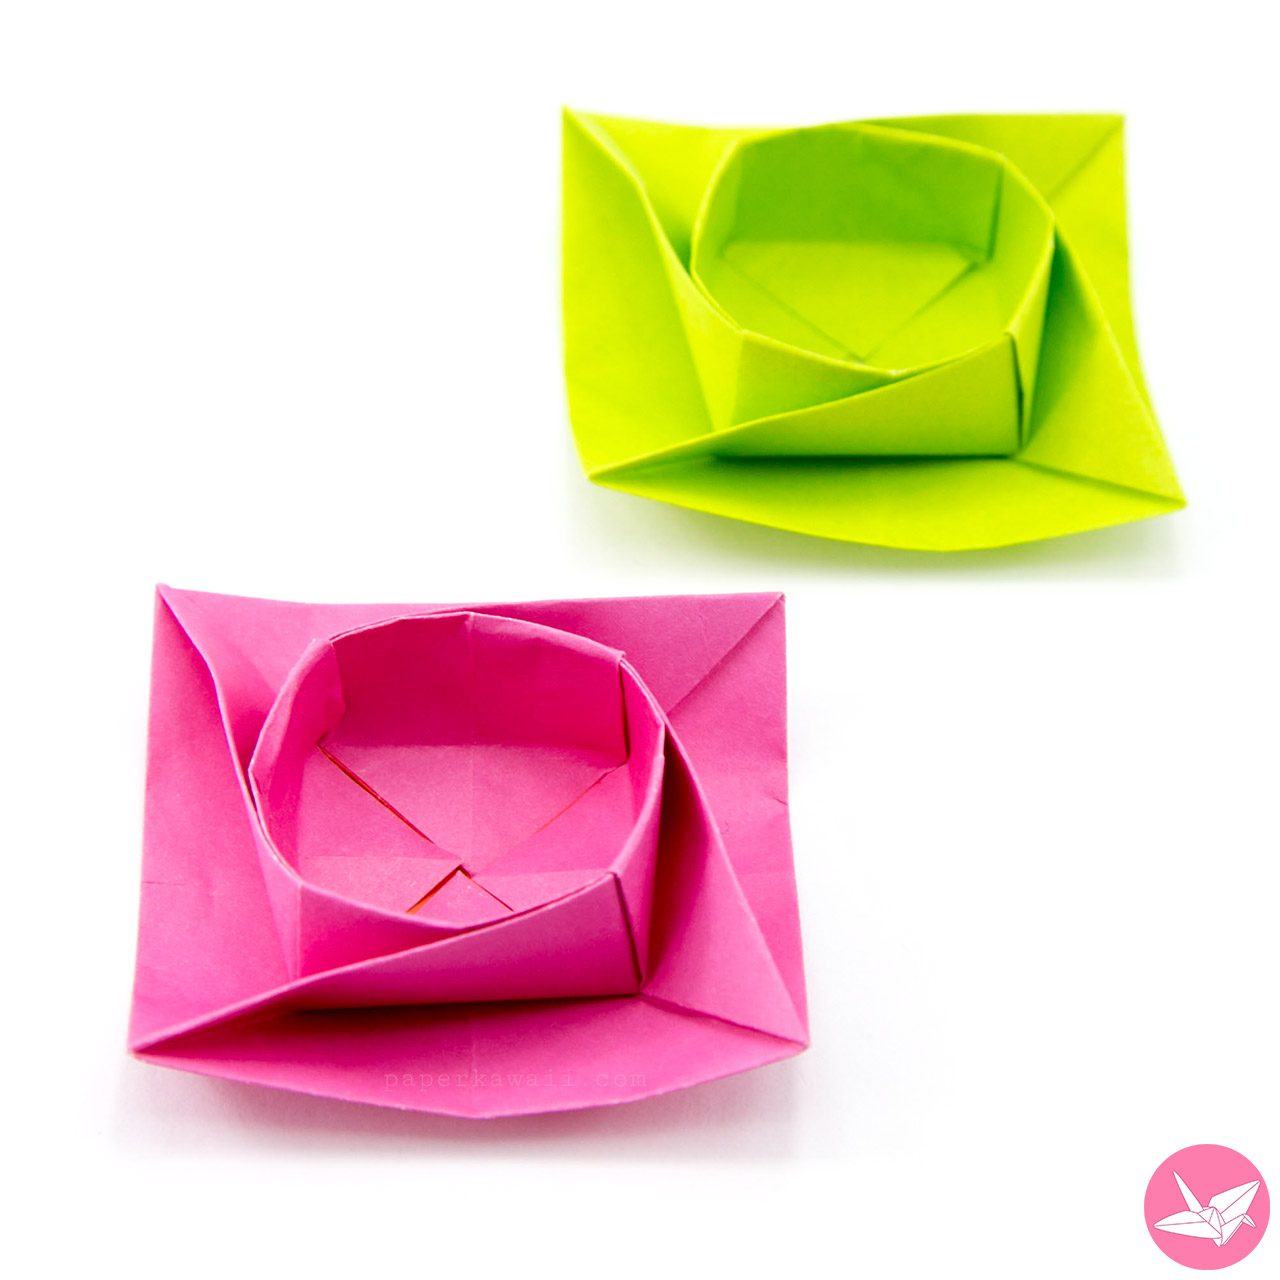 Twisted Round Origami Box